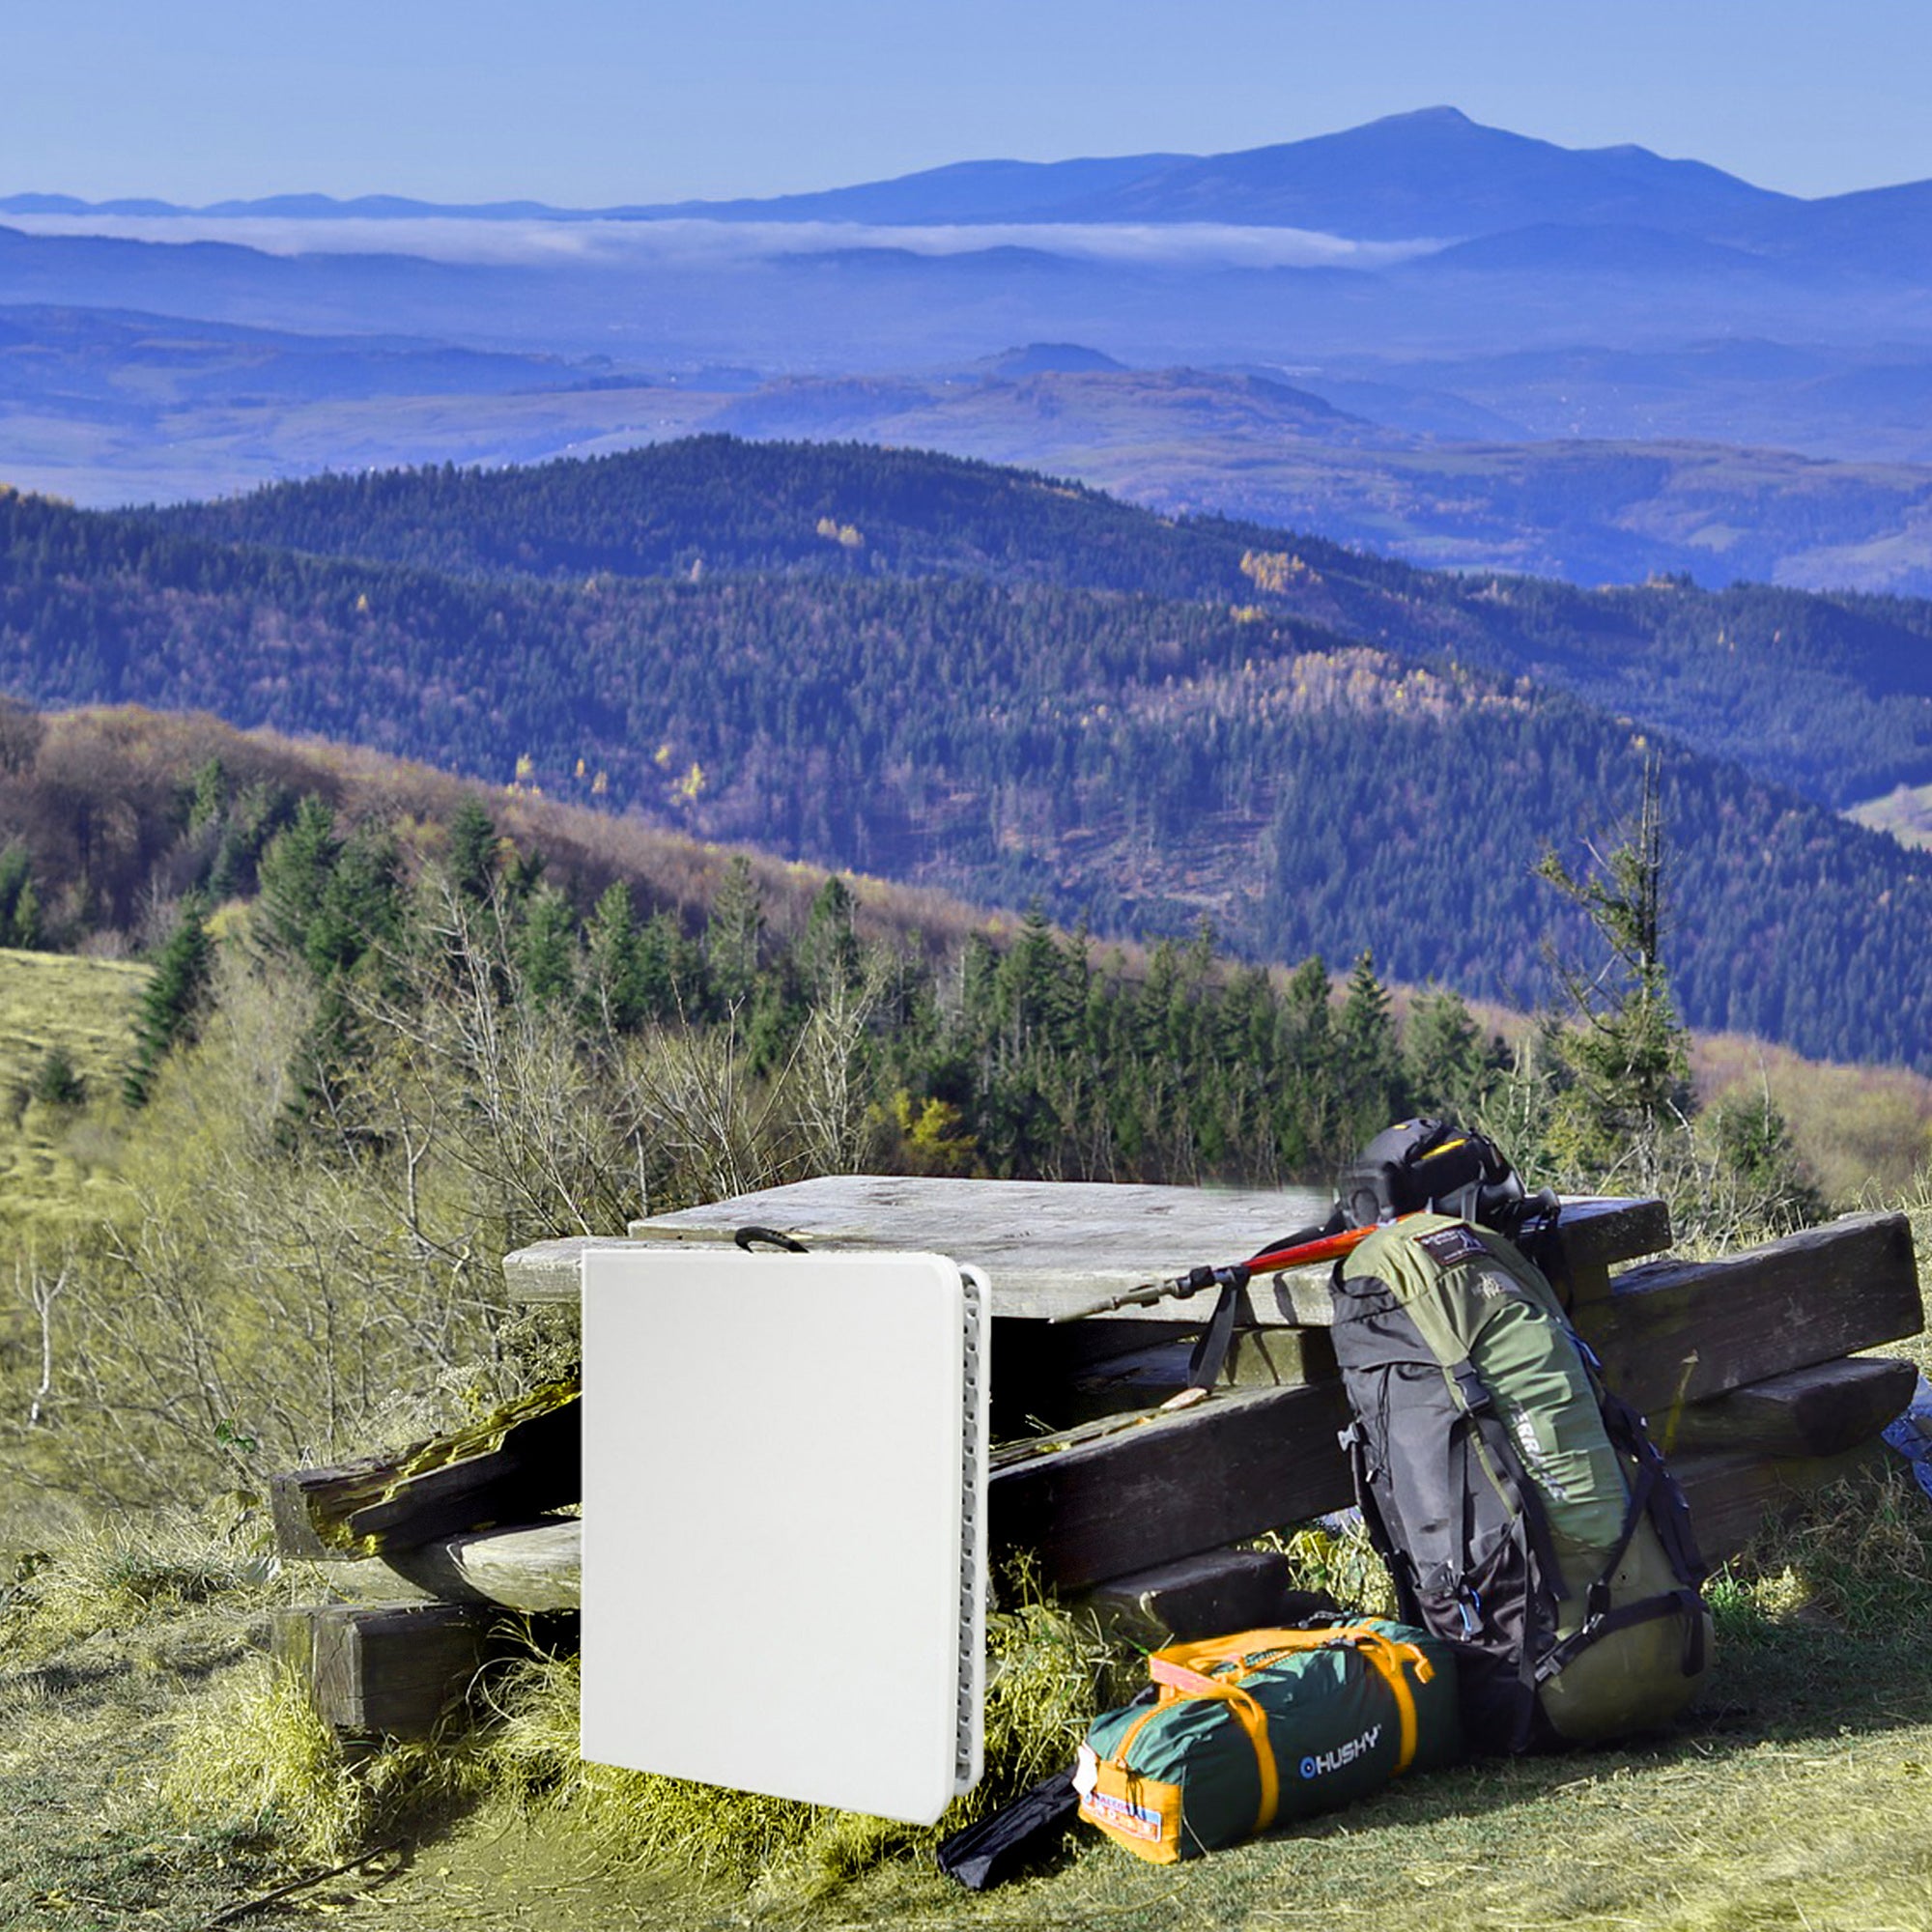 5 Feet - Heavy Duty Trestle Camping Foldable Table